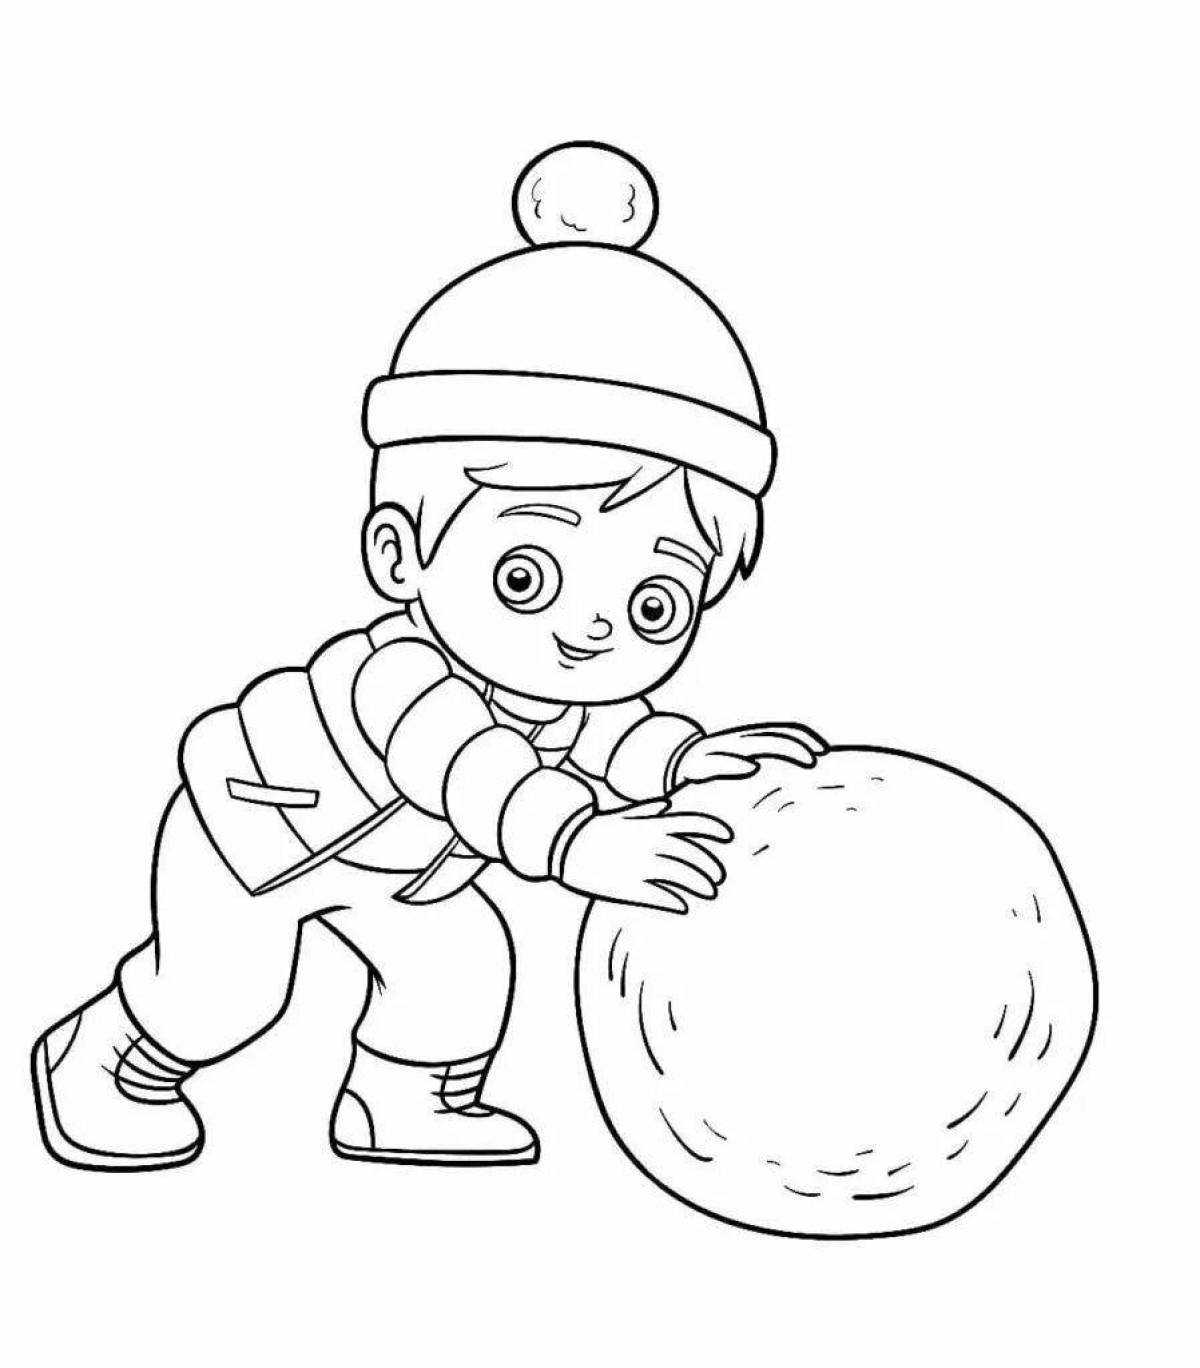 Snowballs for kids #2